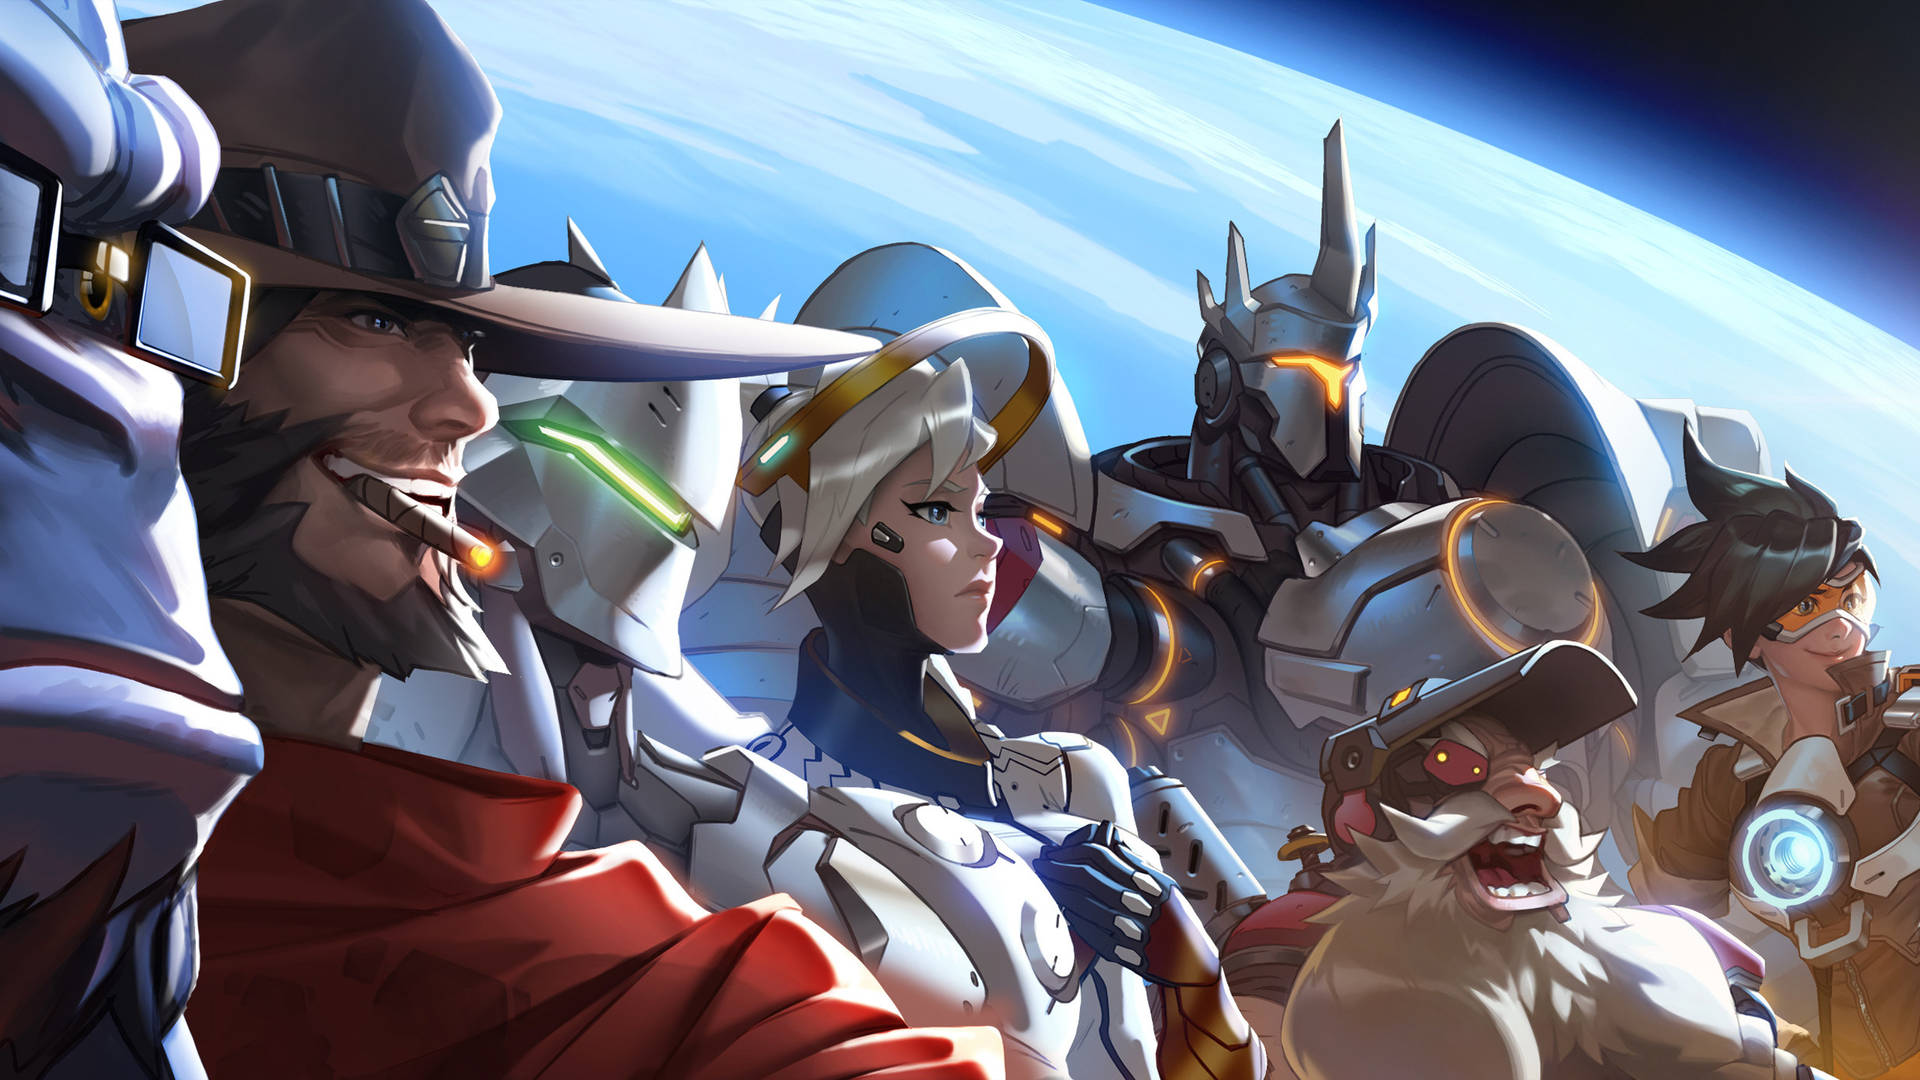 Overwatch - The Heroes Unite Wallpaper